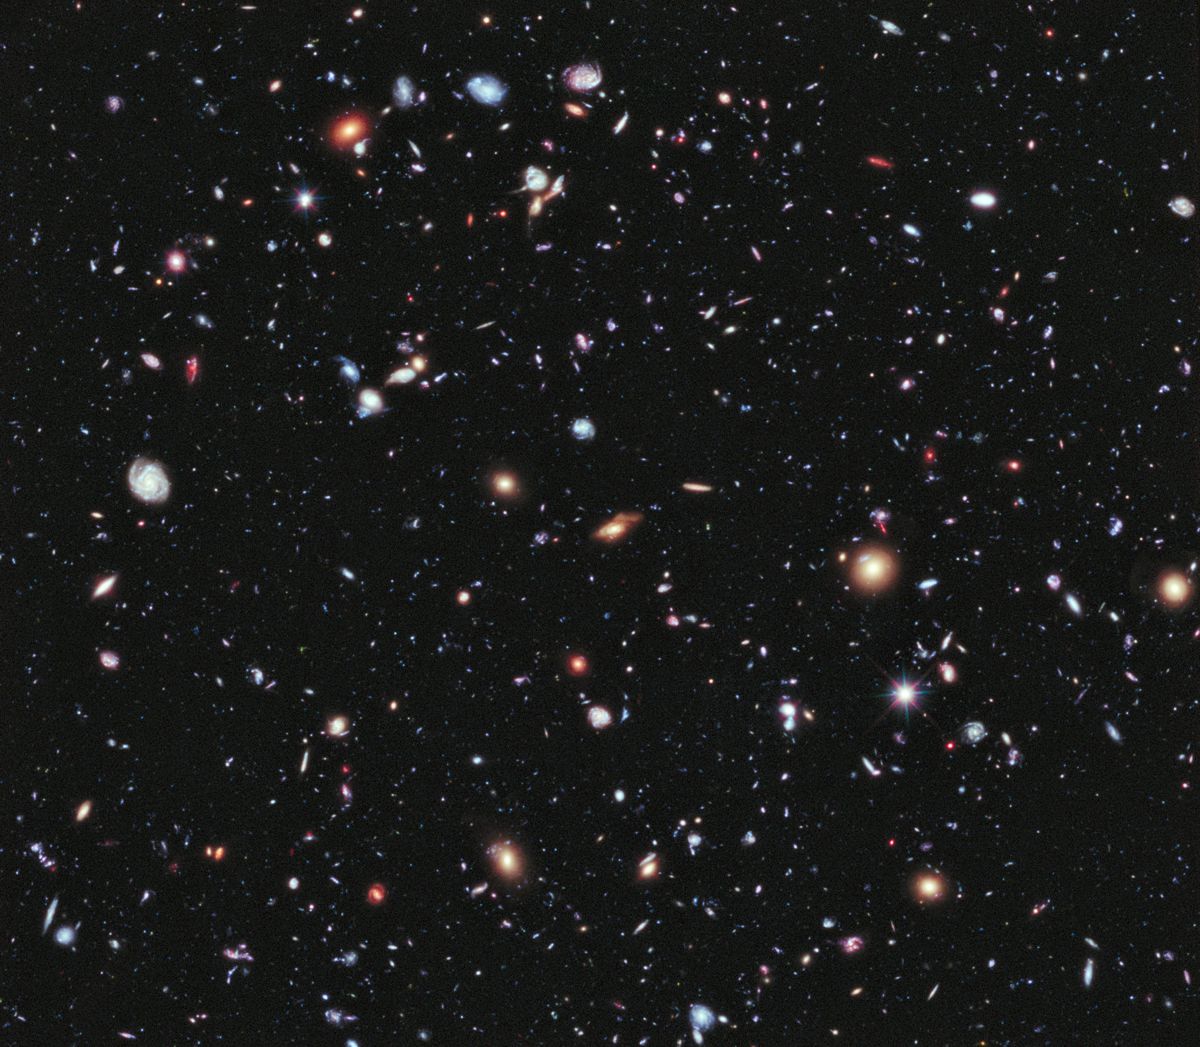 Hubble eXtreme Deep Field (XDF)